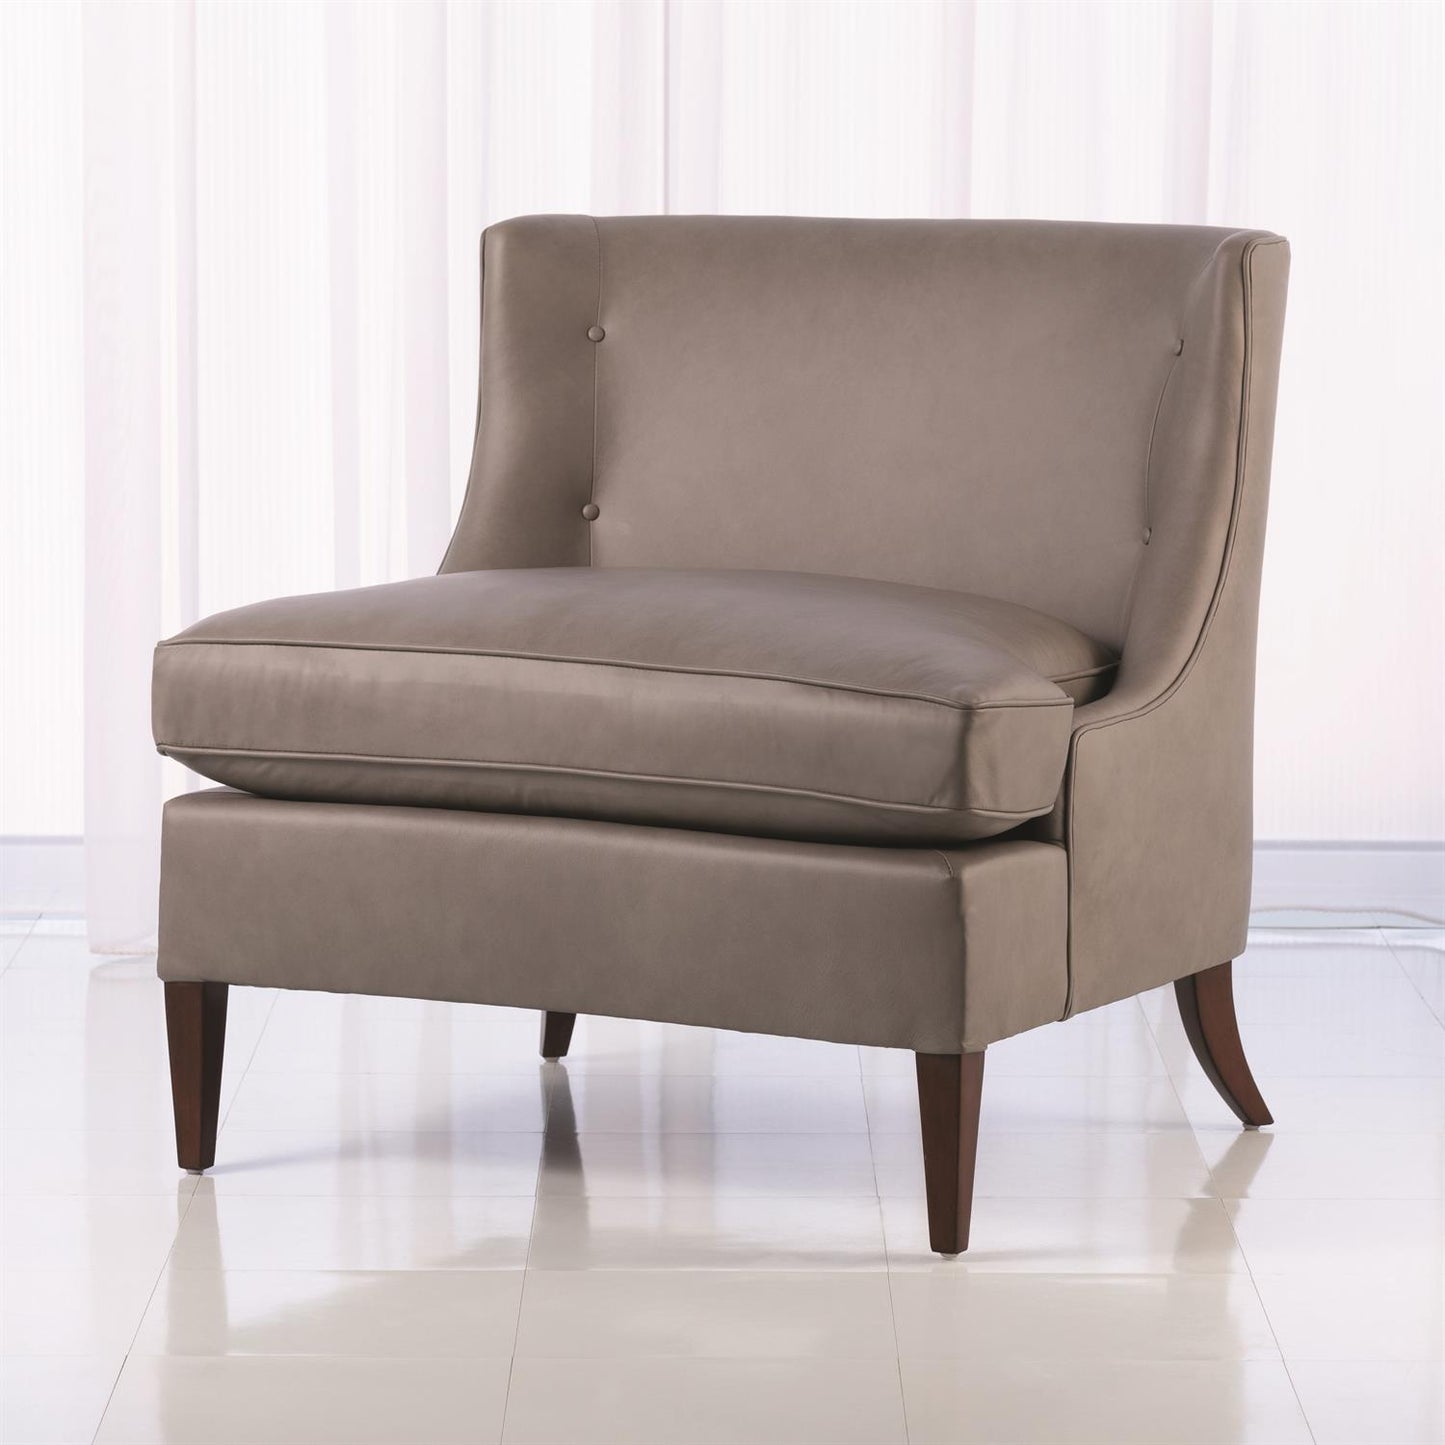 Severn Lounge Chair - Grey Leather - Grats Decor Interior Design & Build Inc.